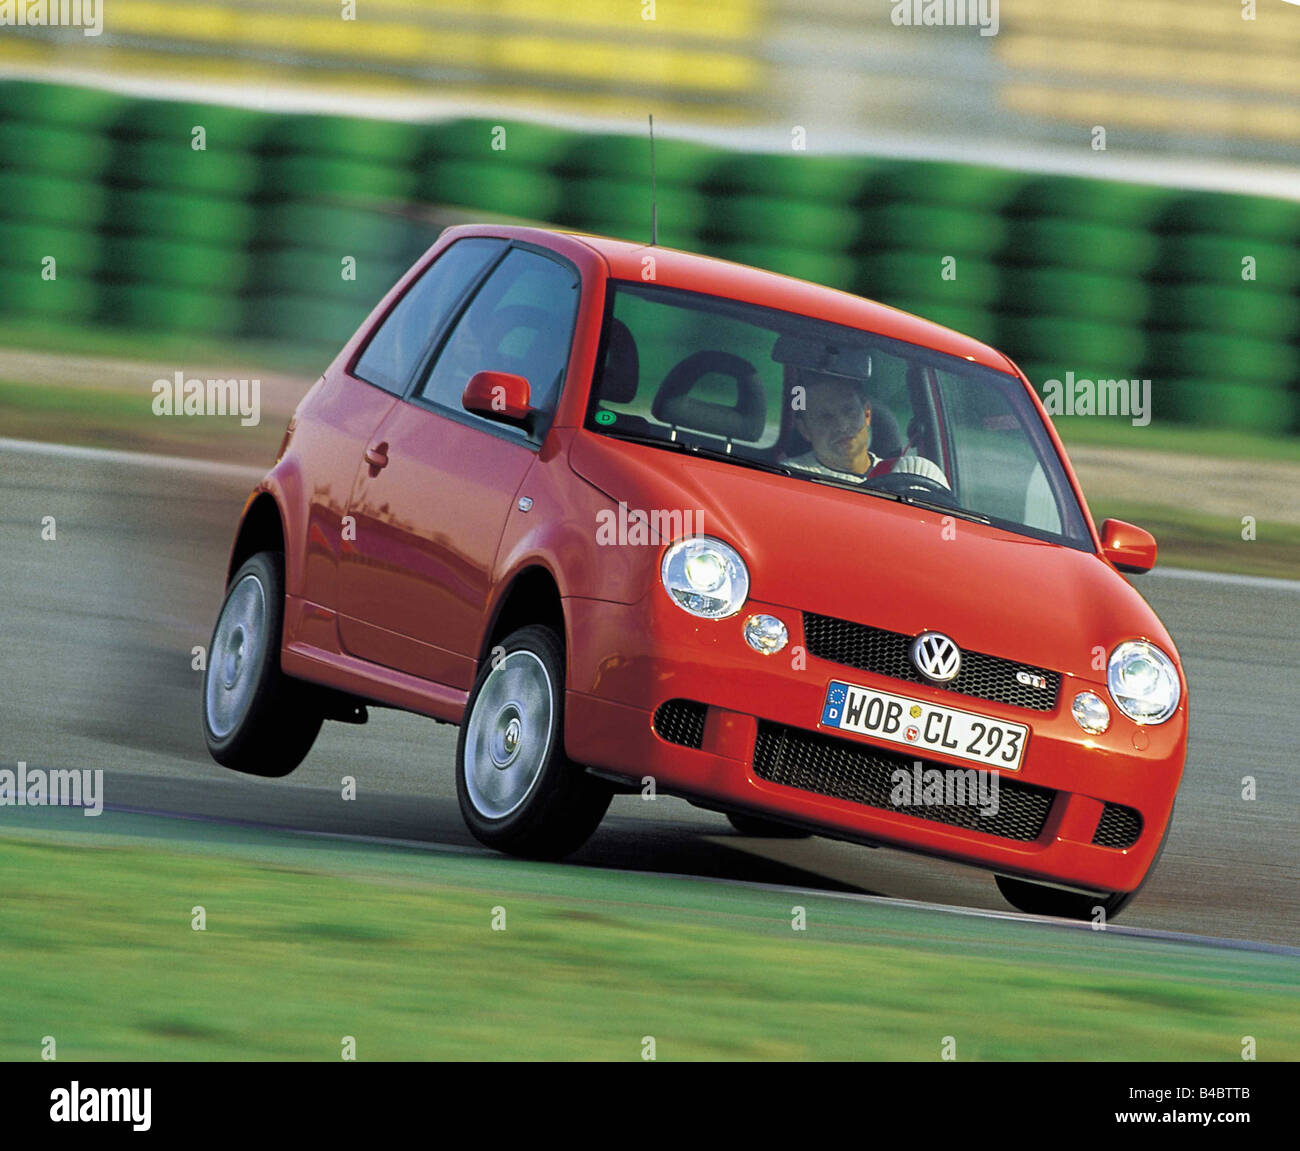 https://c8.alamy.com/comp/B4BTTB/car-vw-volkswagen-lupo-gti-miniapproxs-limousine-red-model-year-1998-B4BTTB.jpg